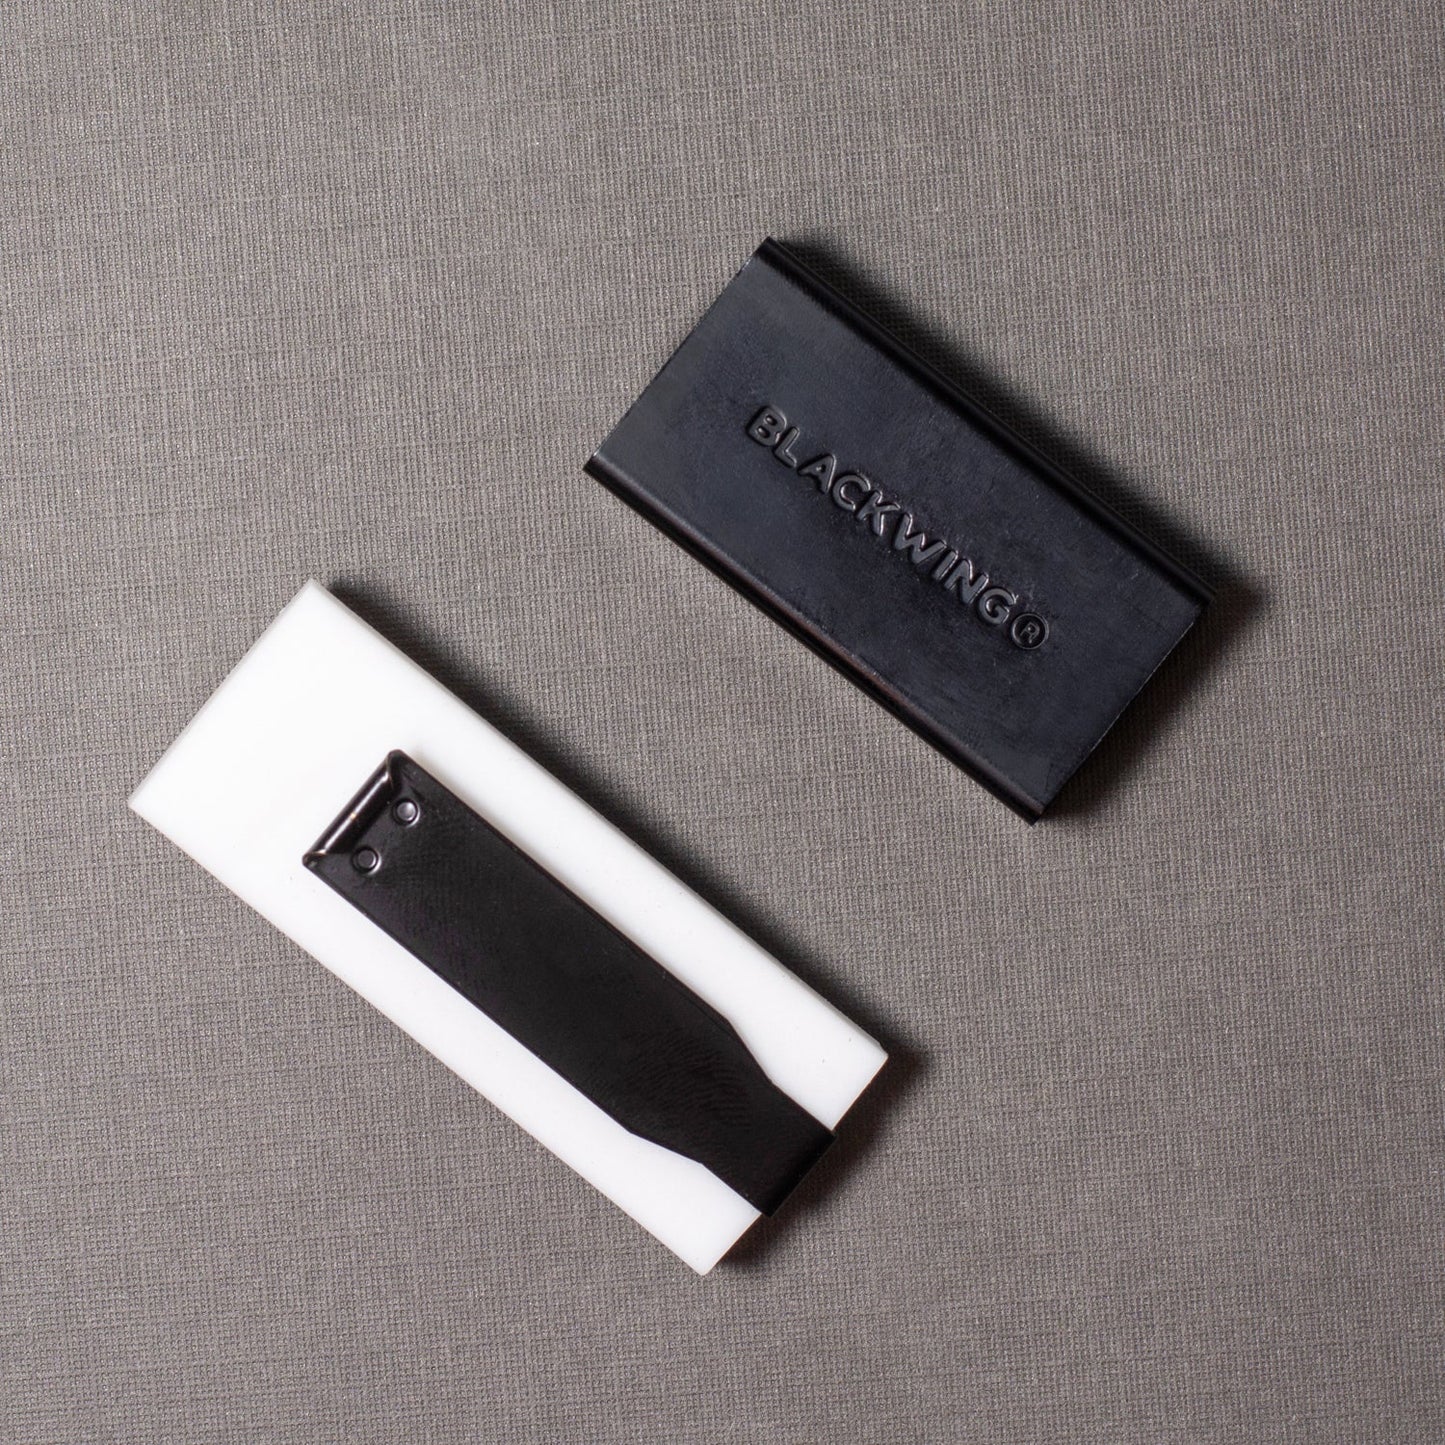 Blackwing Handheld Eraser Replacements- Set of 3